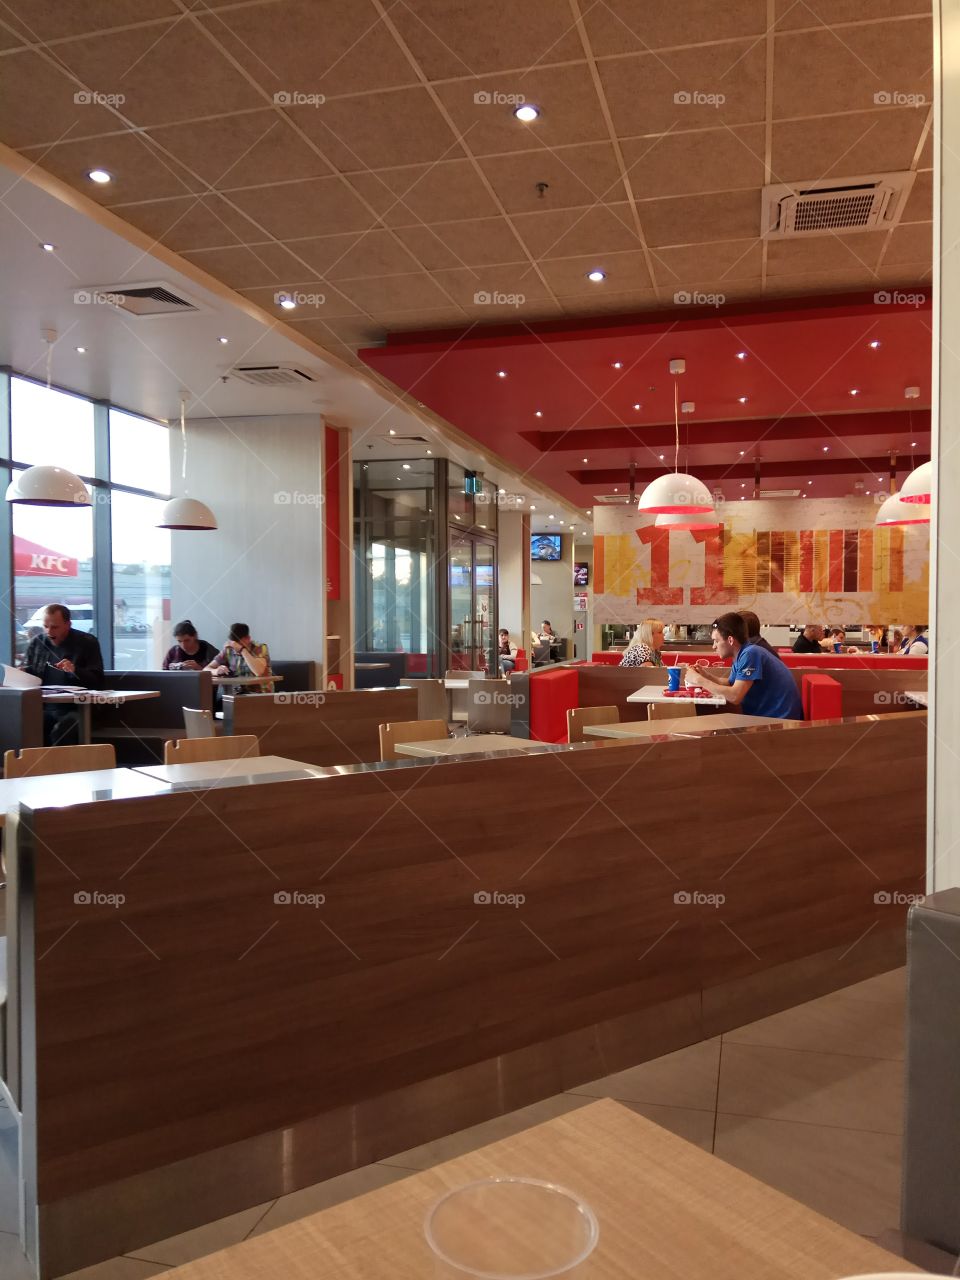 restaurant KFC